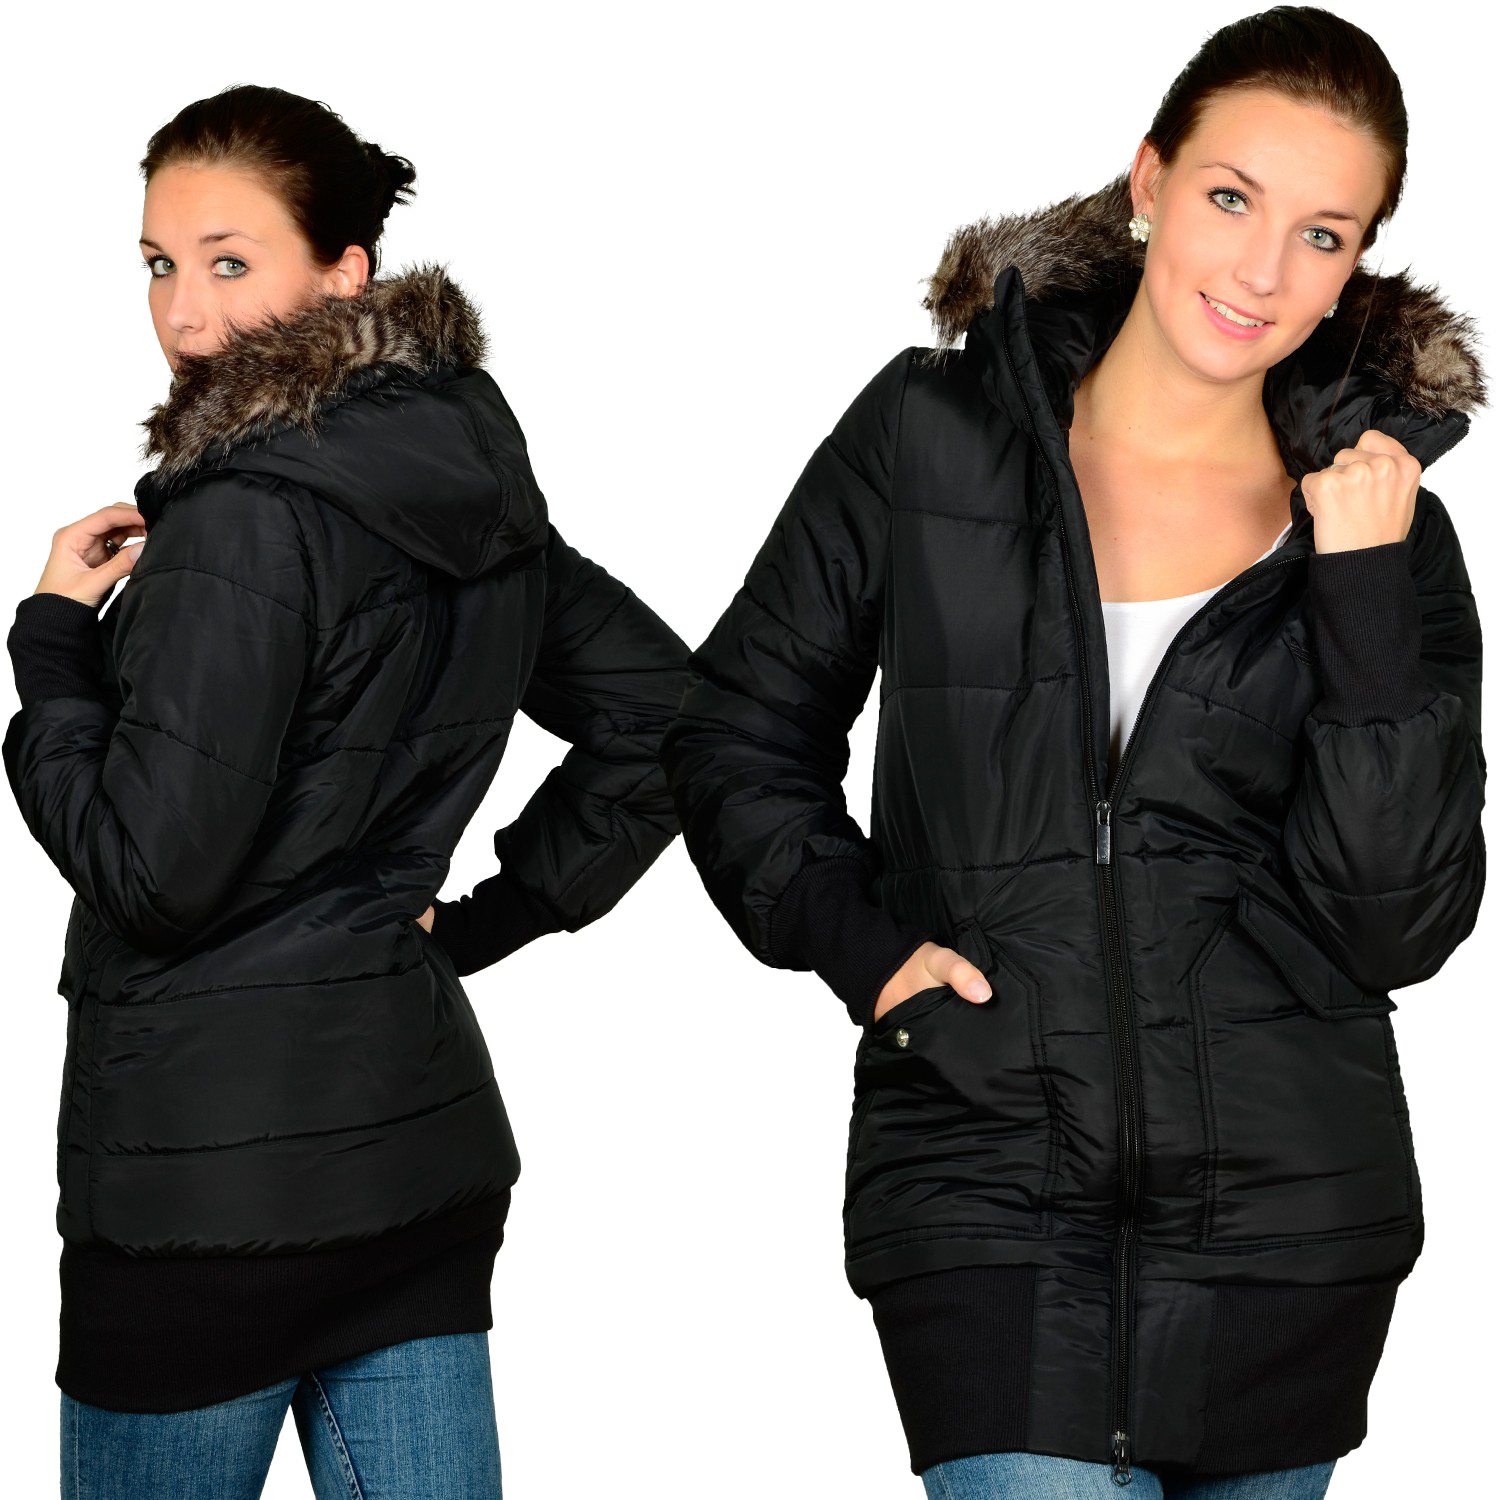 Black Winter Jacket For Women PNG Free Download